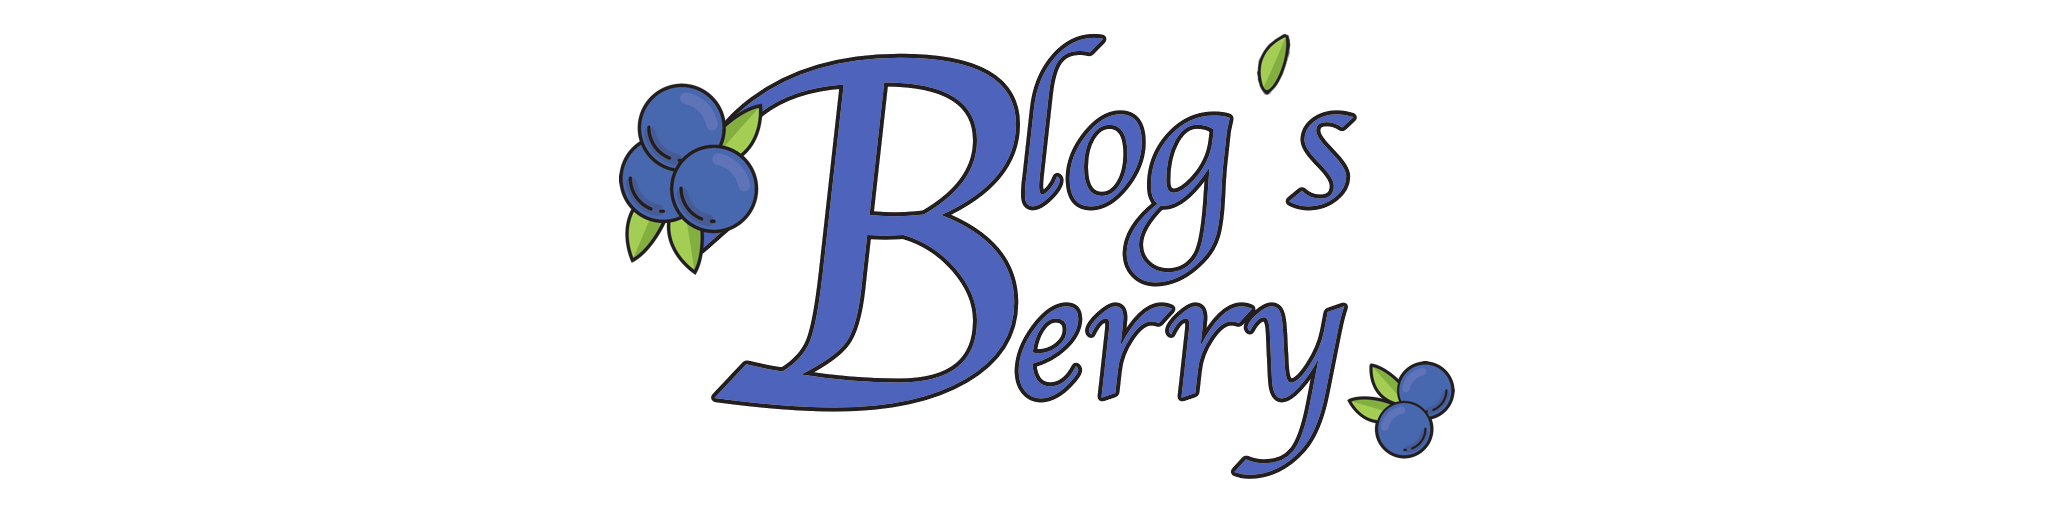 Blog's Berry